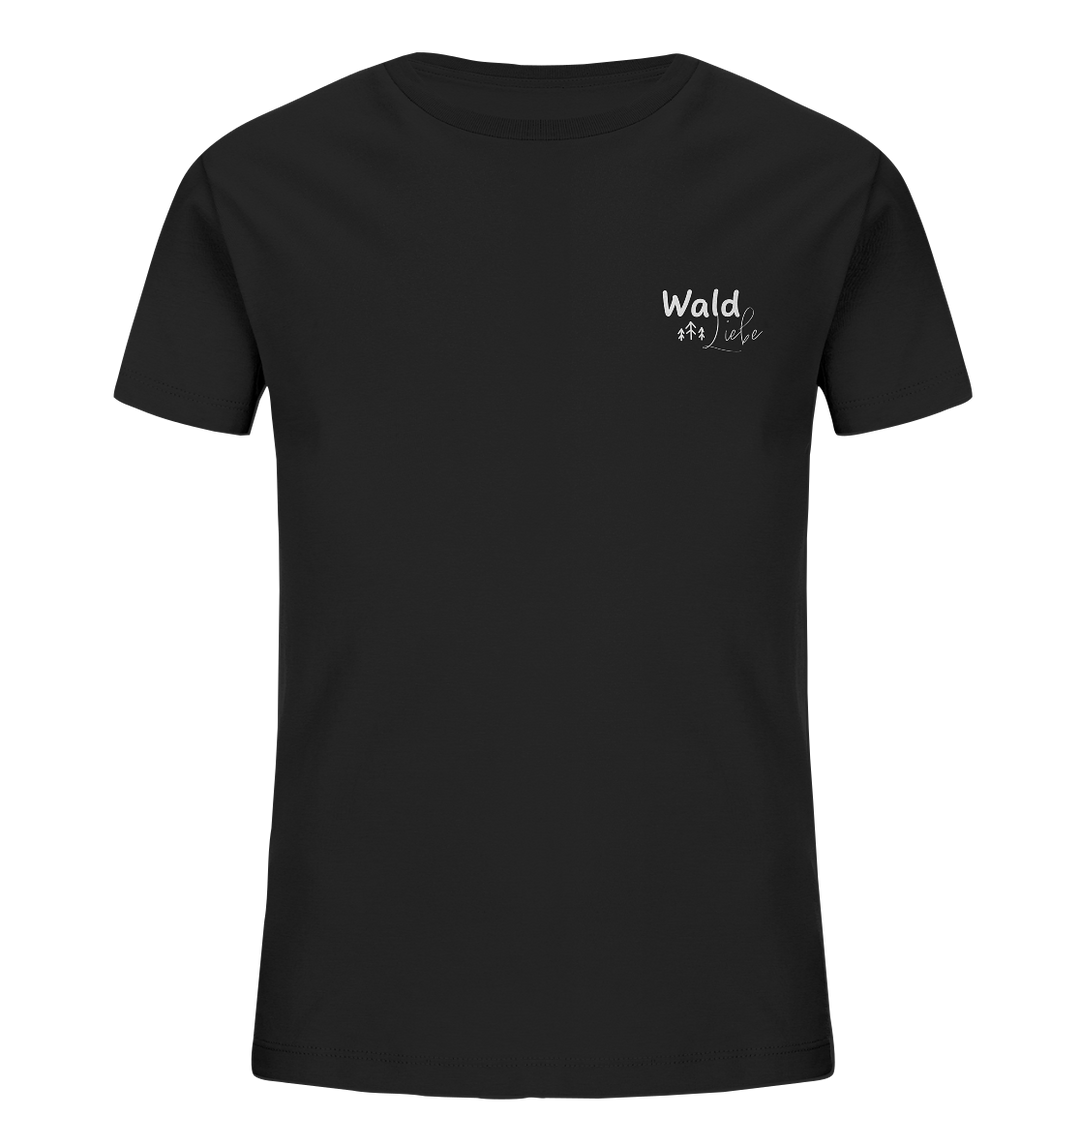 WALDLIEBE - Kinder Bio T-Shirt